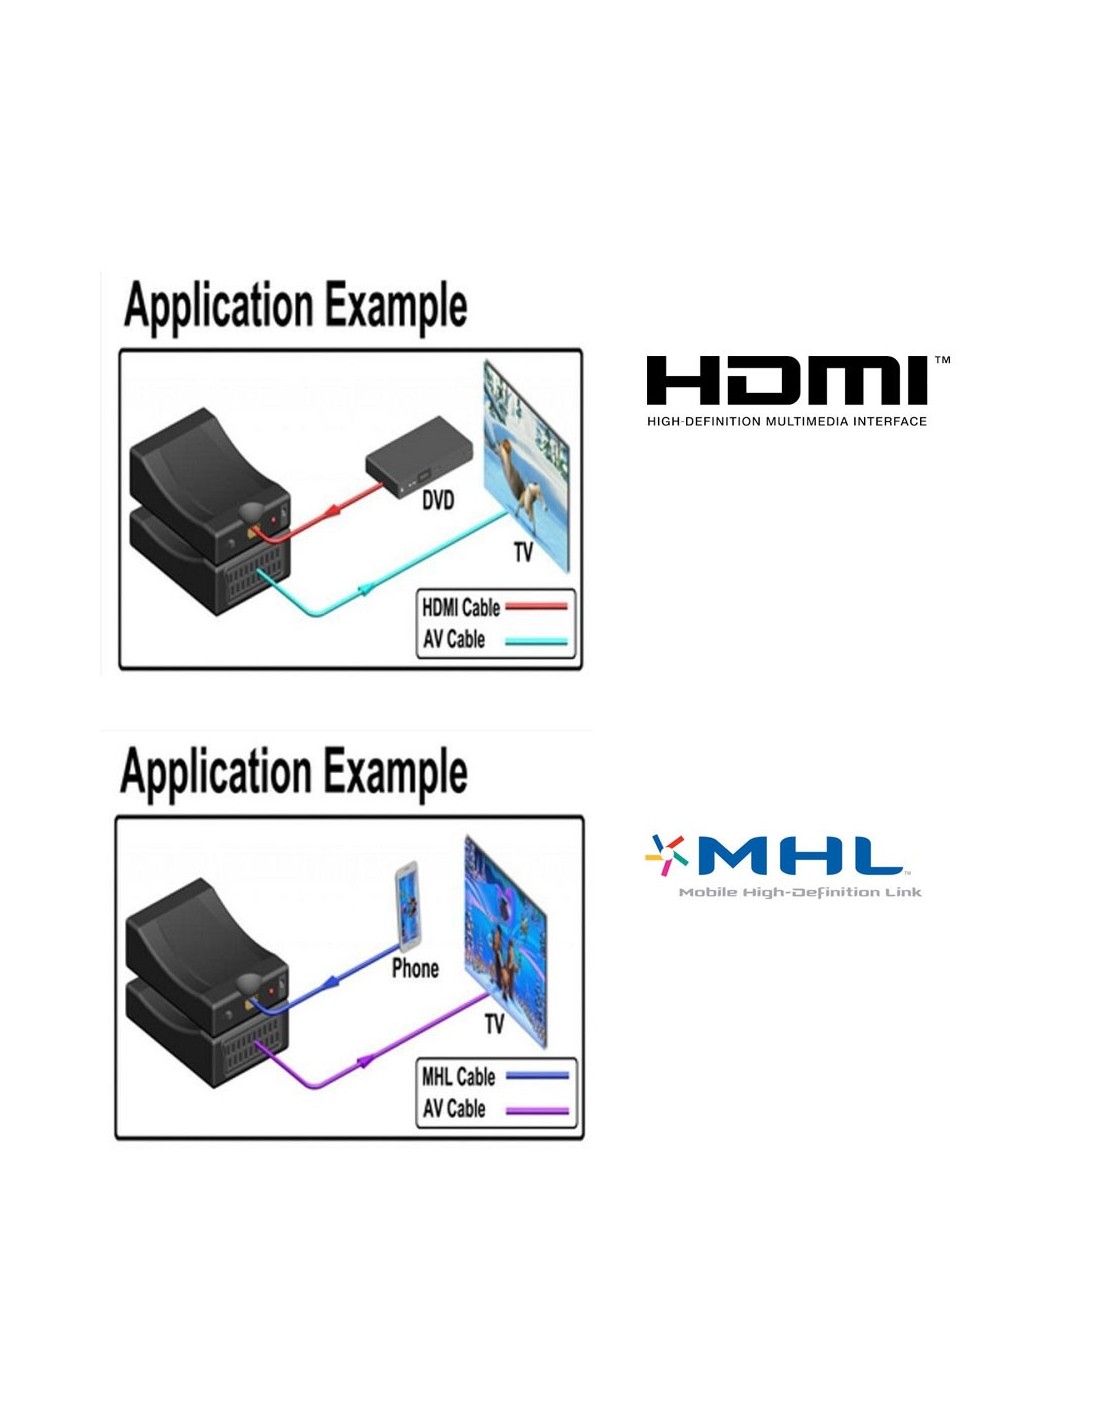 Conversor euroconector a HDMI - Conversor euroconector a HDMI